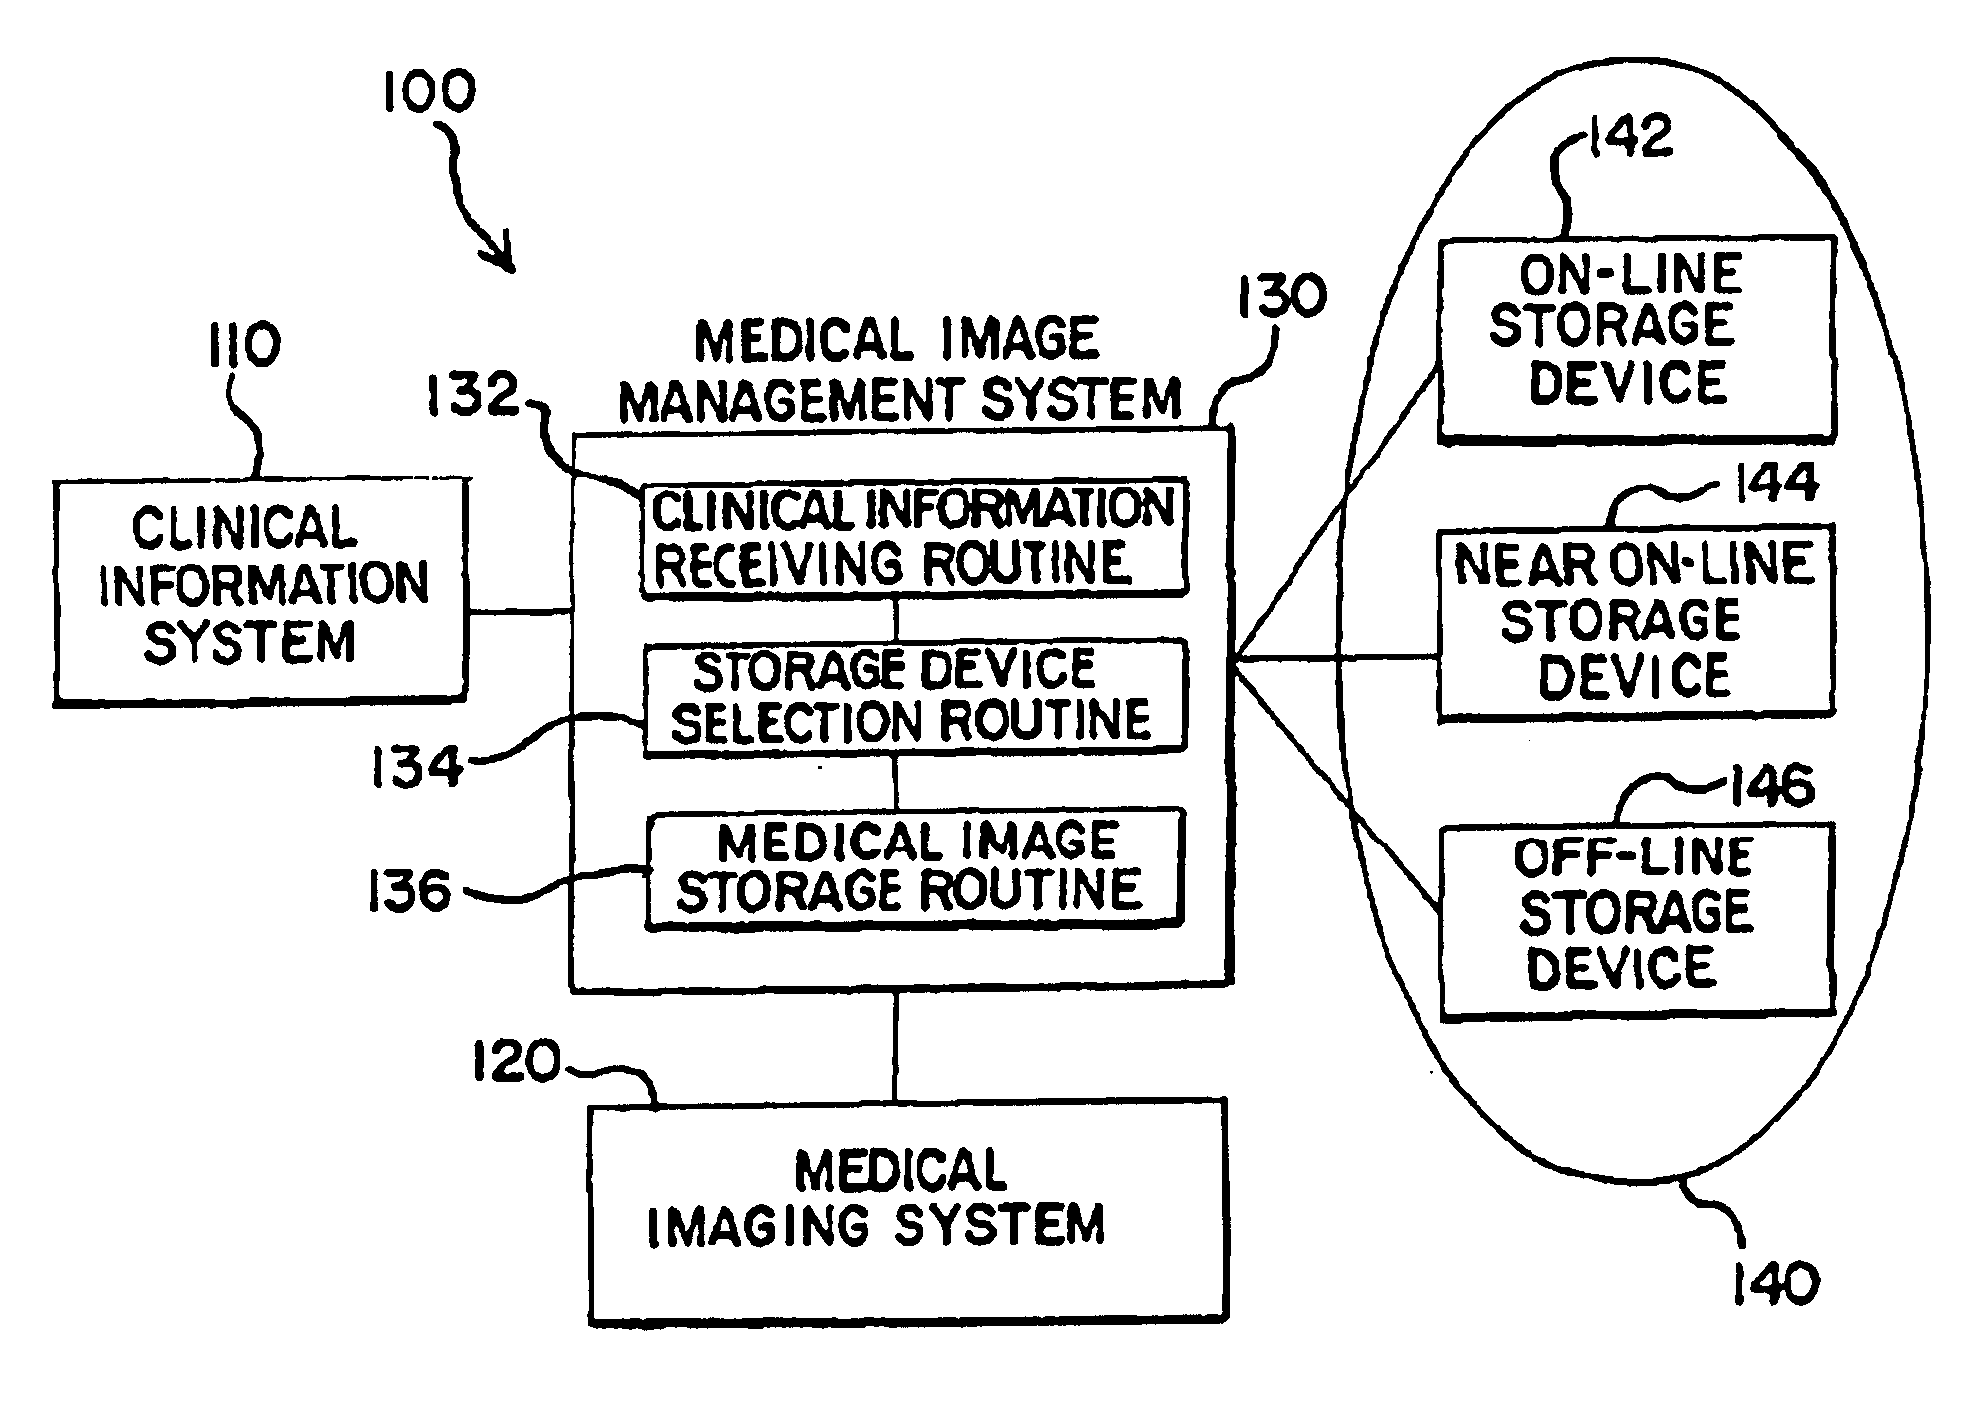 Ultrasound image and other medical image storage system